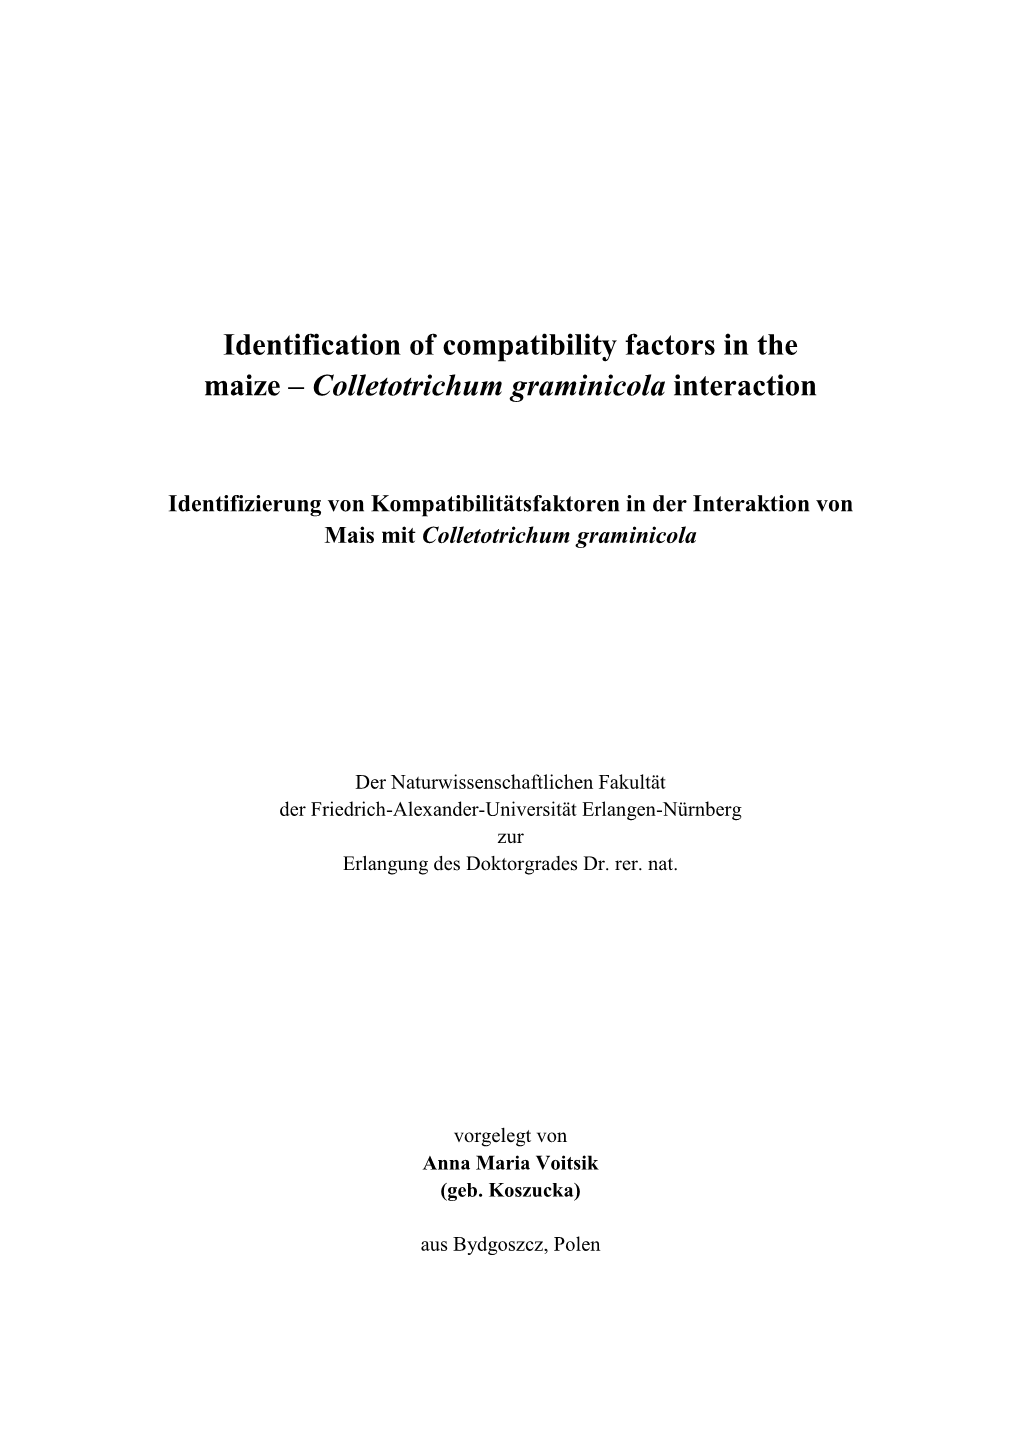 Colletotrichum Graminicola Interaction